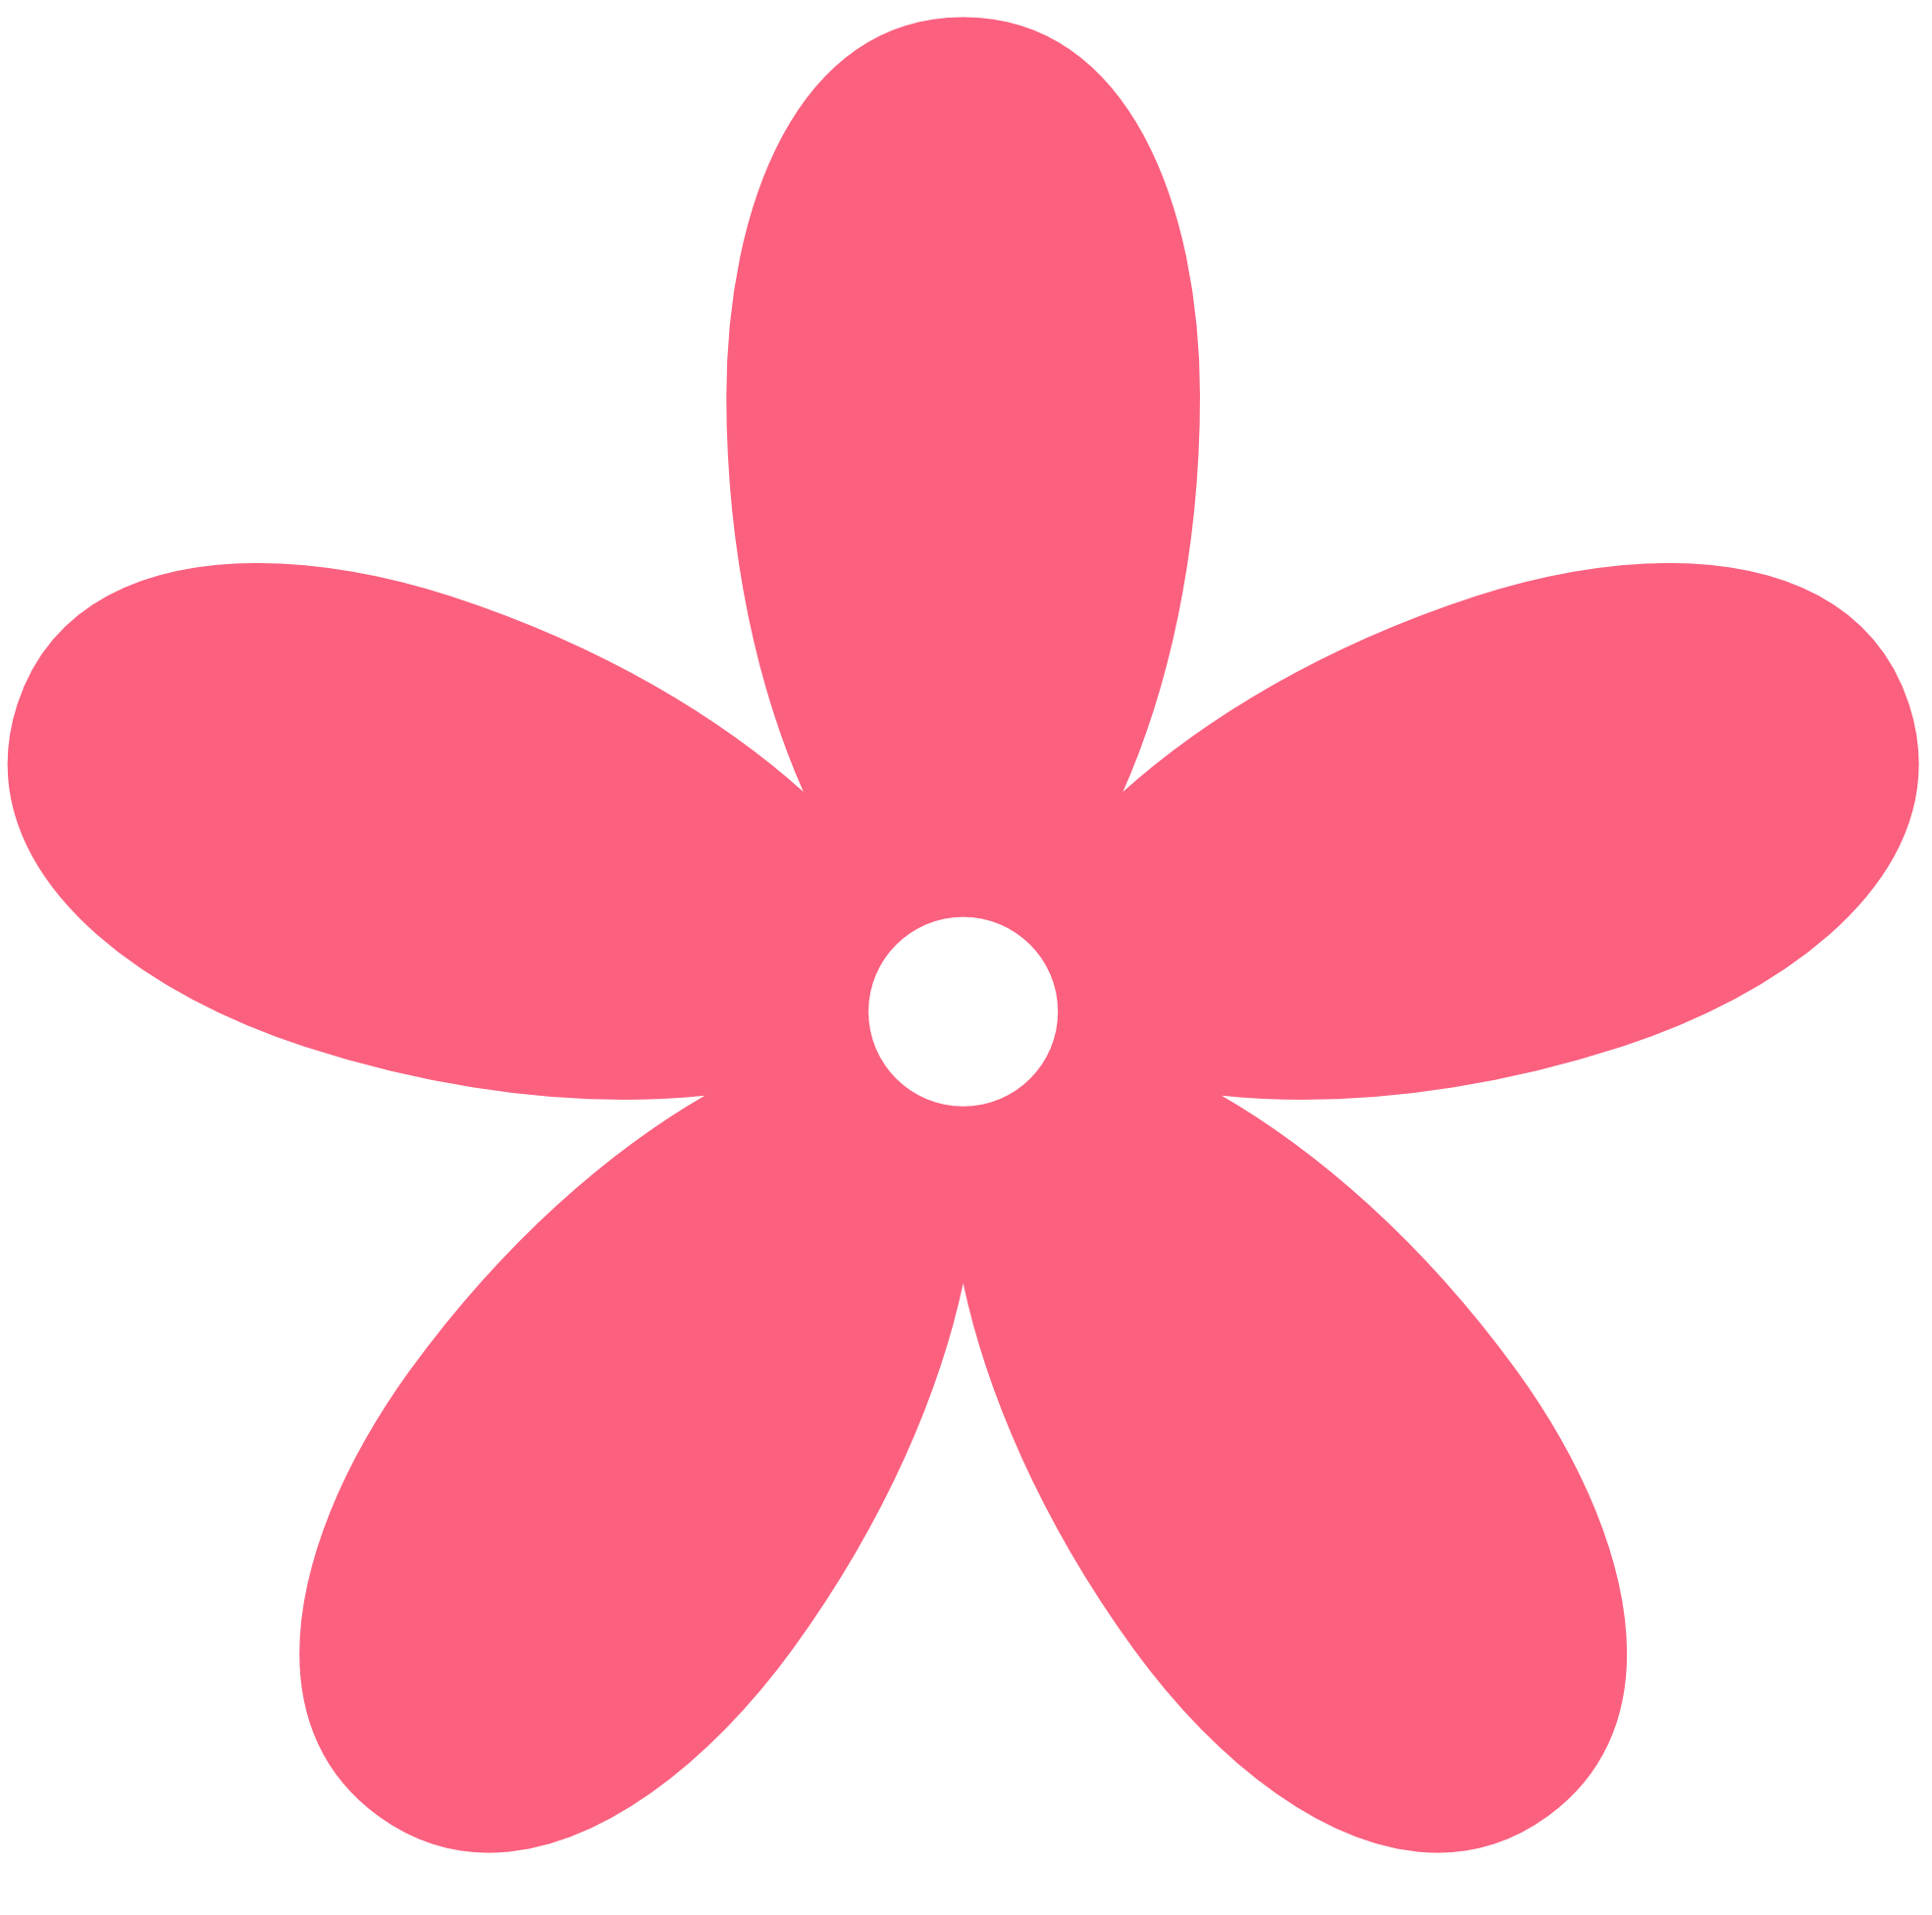 Simple flower clipart